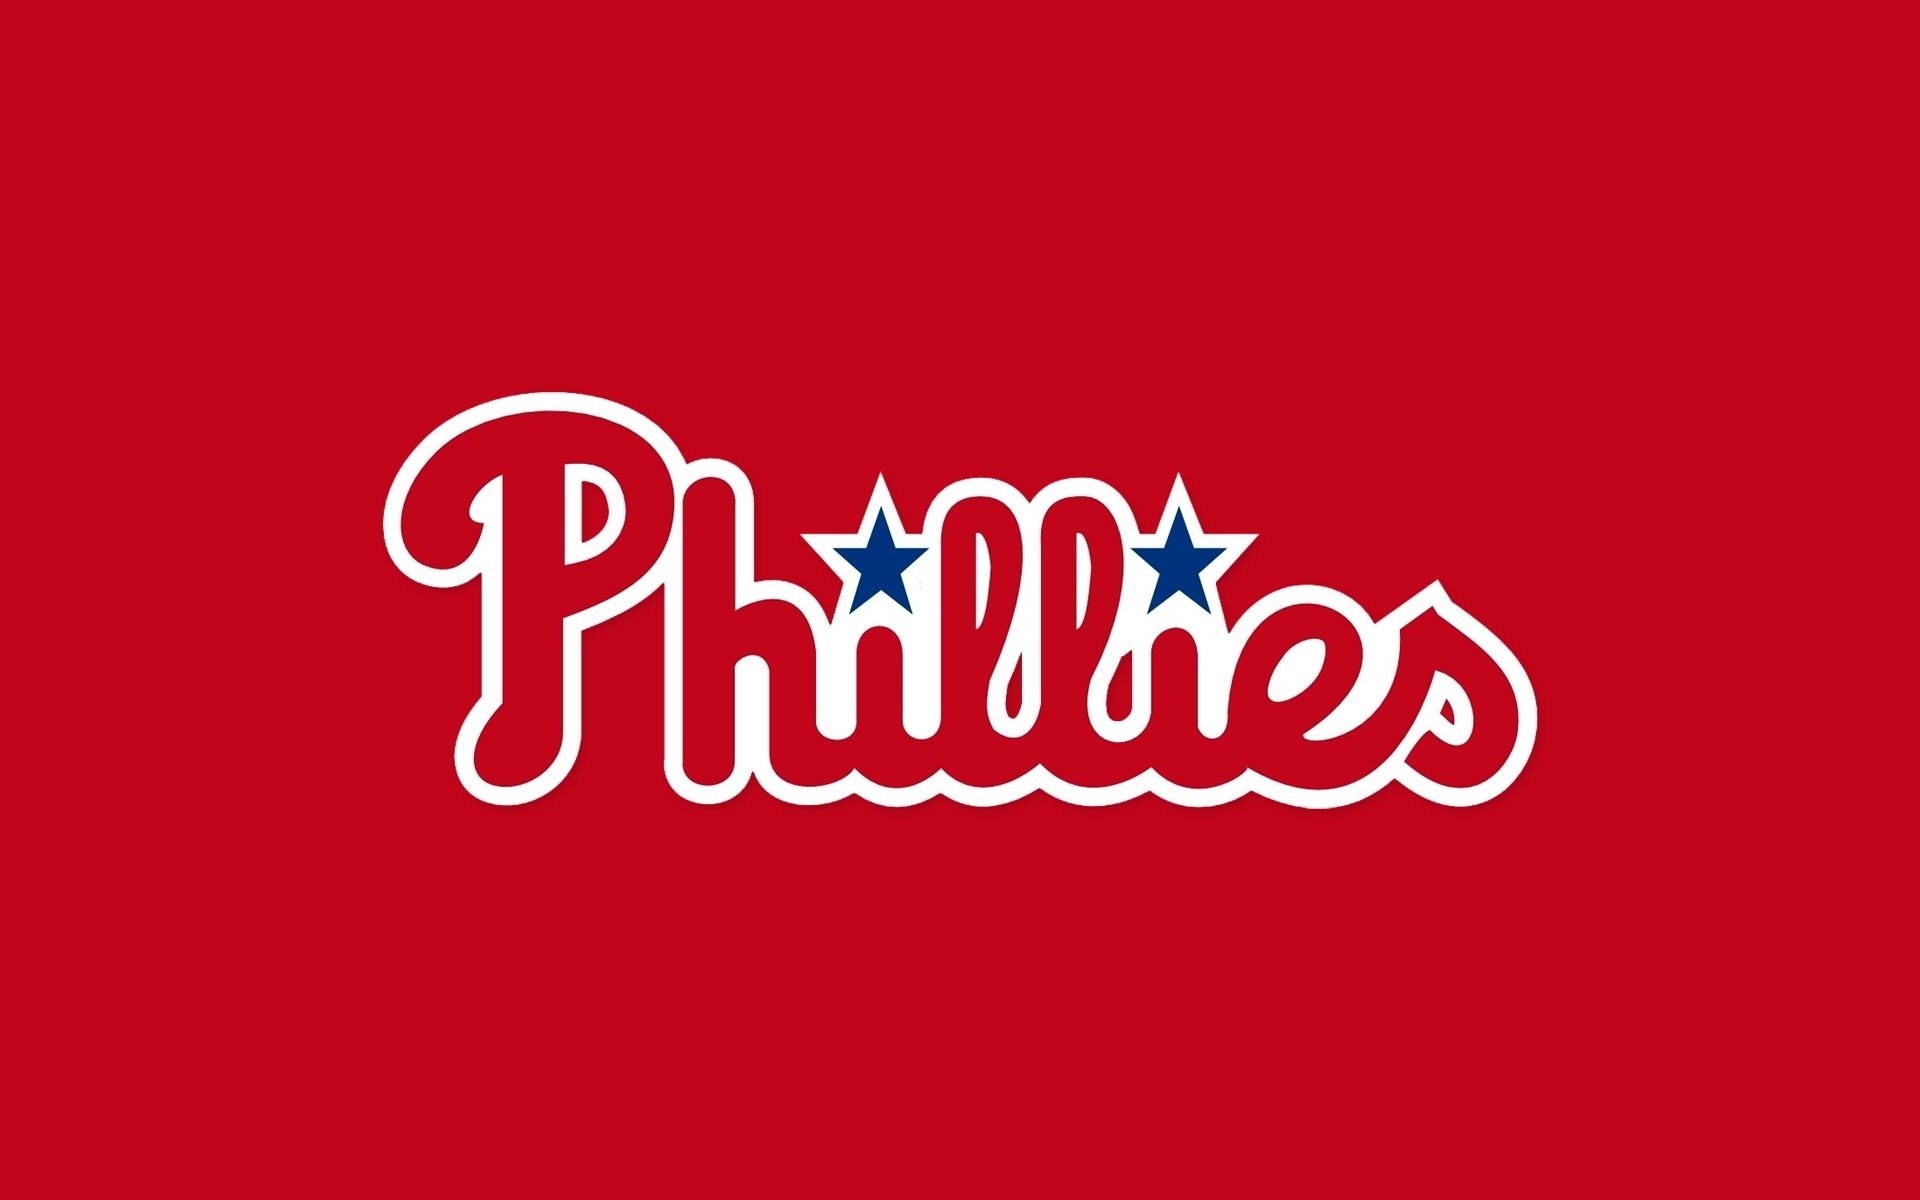 1920x1200 Sports - Philadelphia Phillies Wallpaper